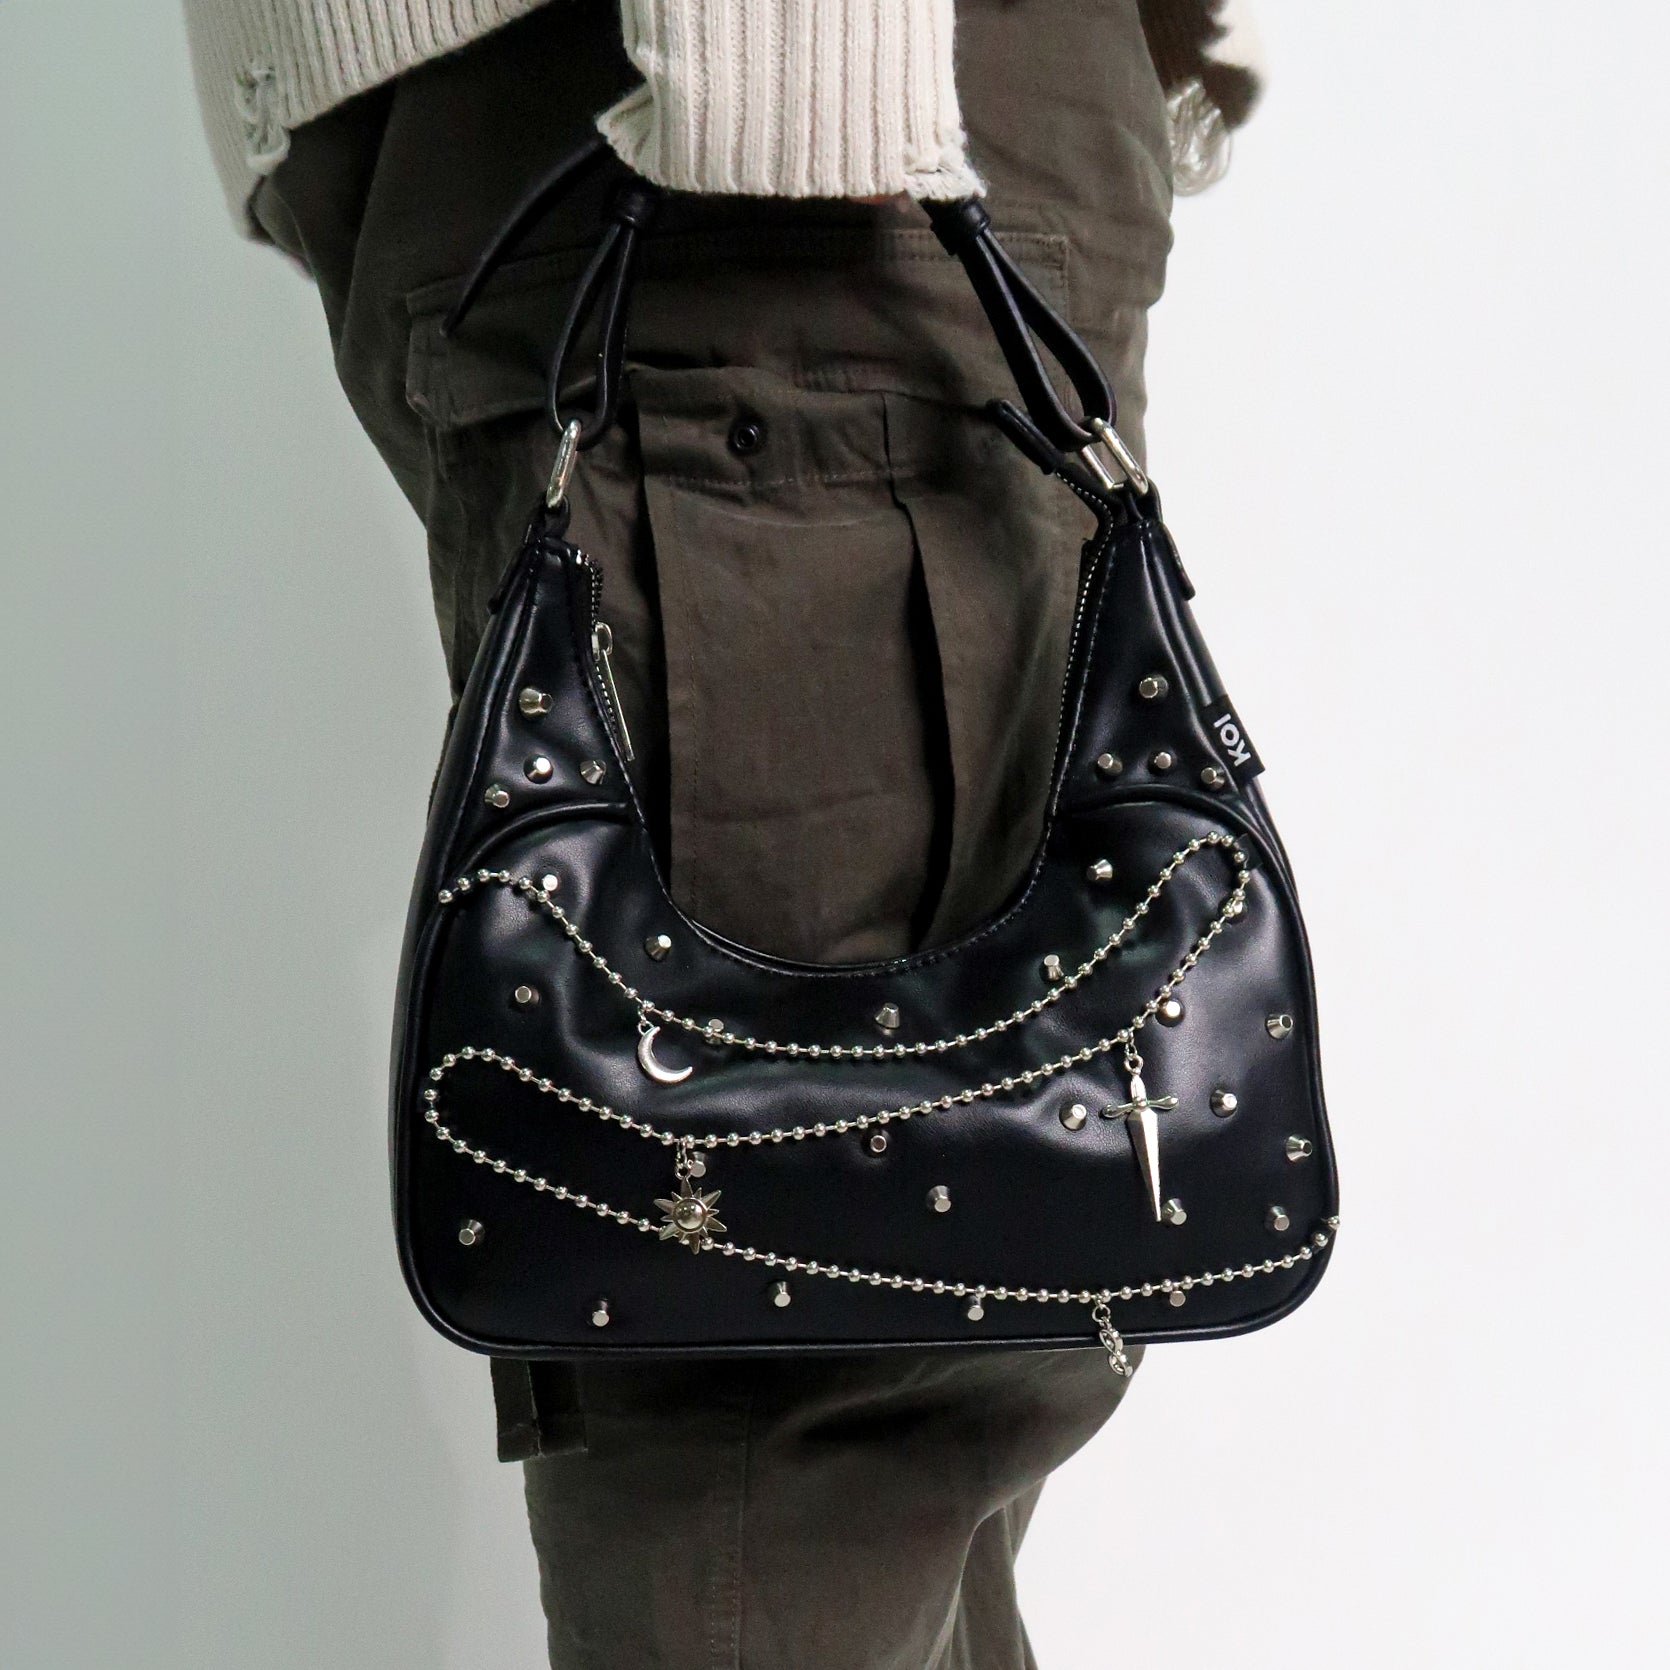 Jinx Mystic Charm Black Shoulder Bag - Accessories - KOI Footwear - OS - Model View